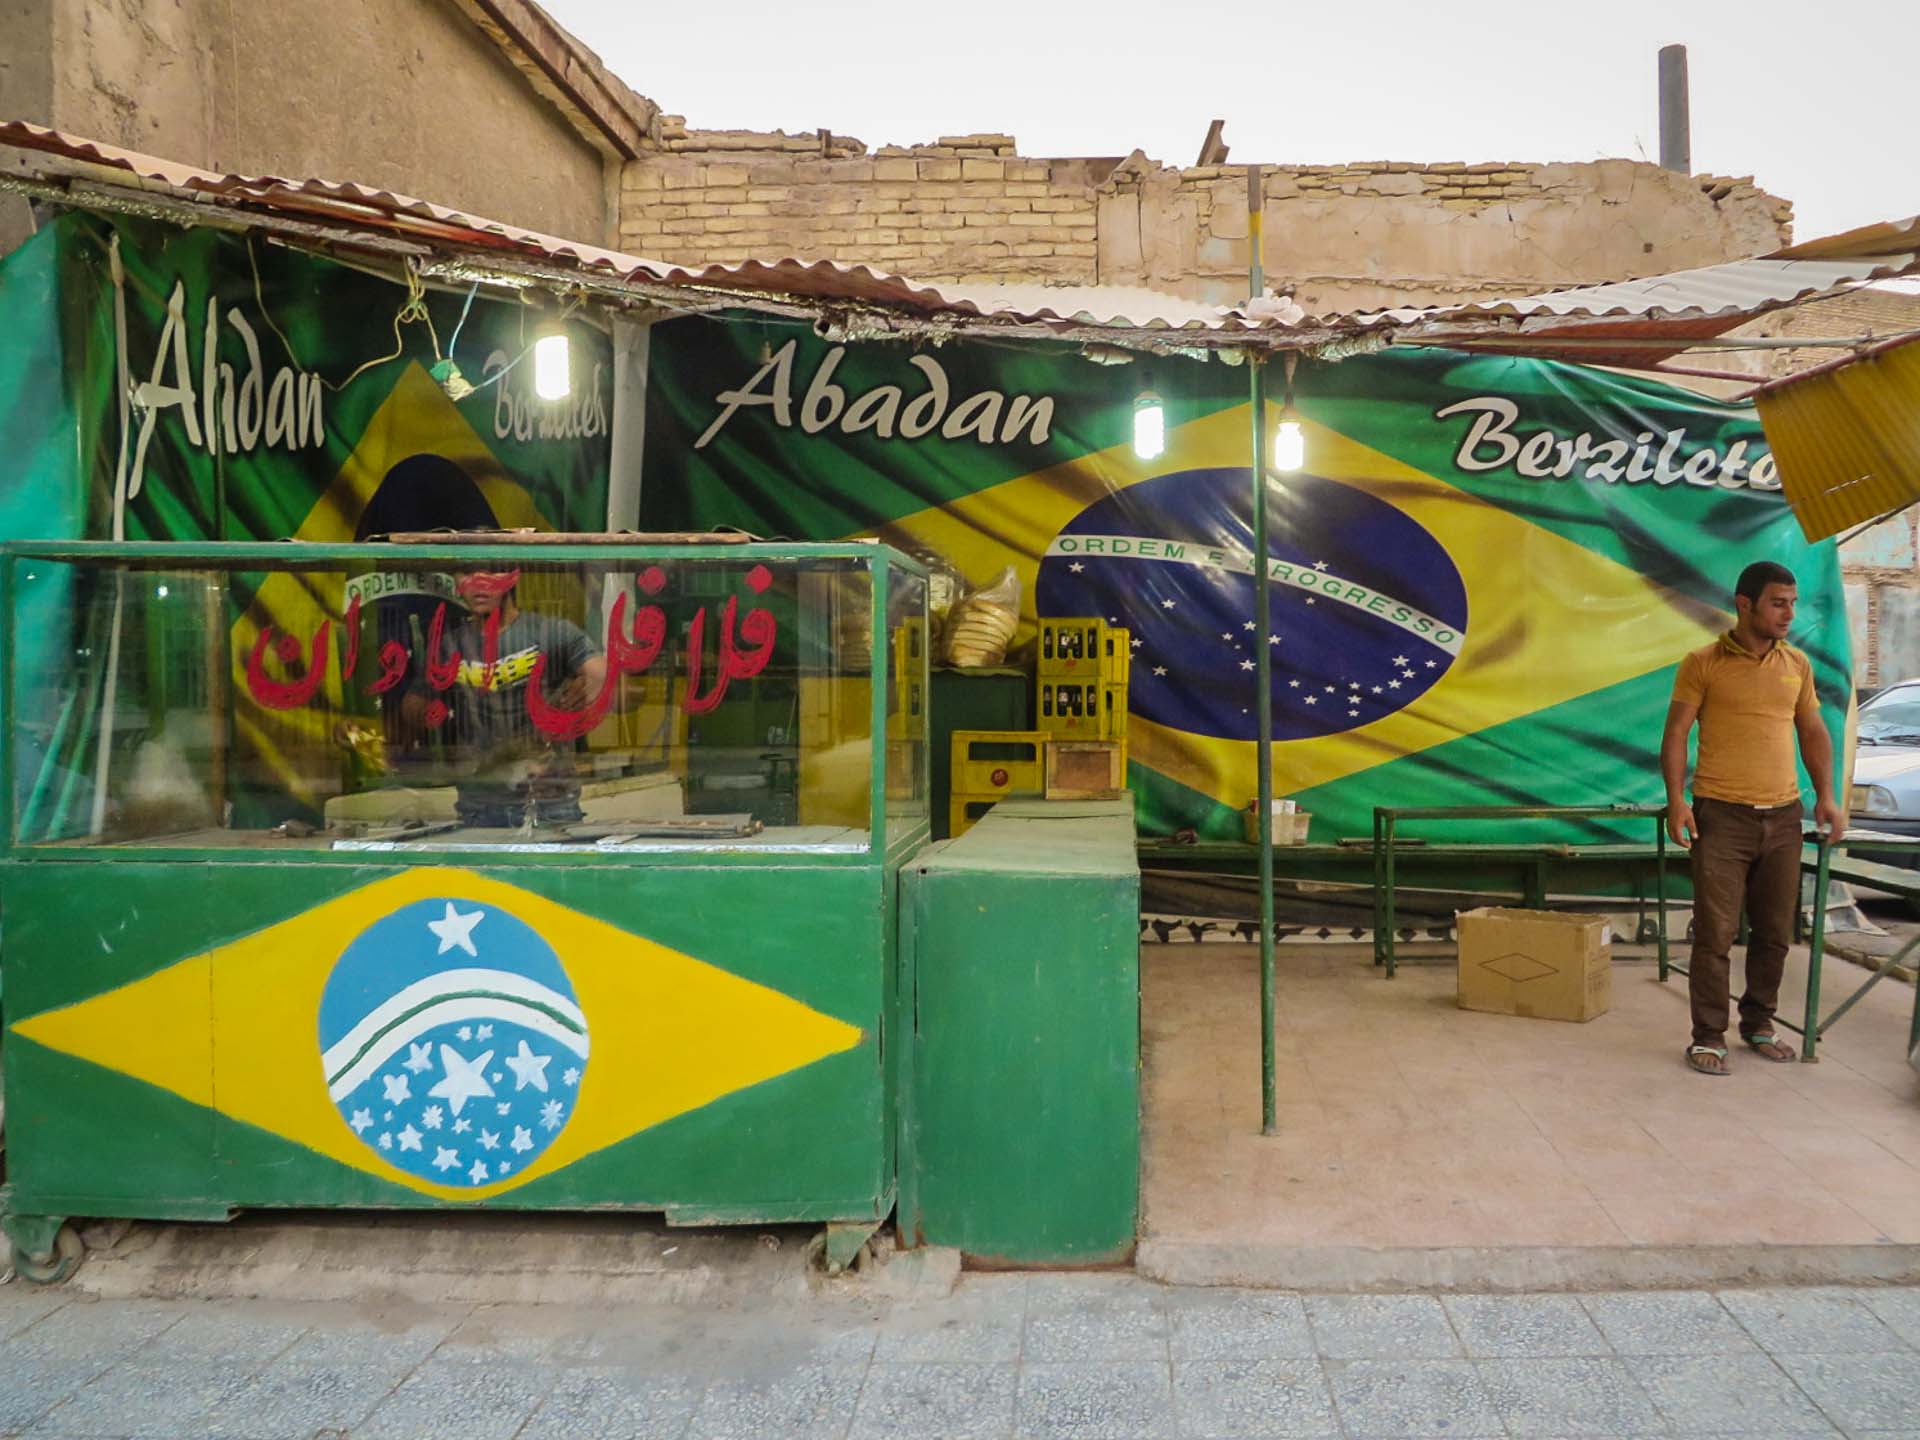 Shop in Abadan with brazilian flags